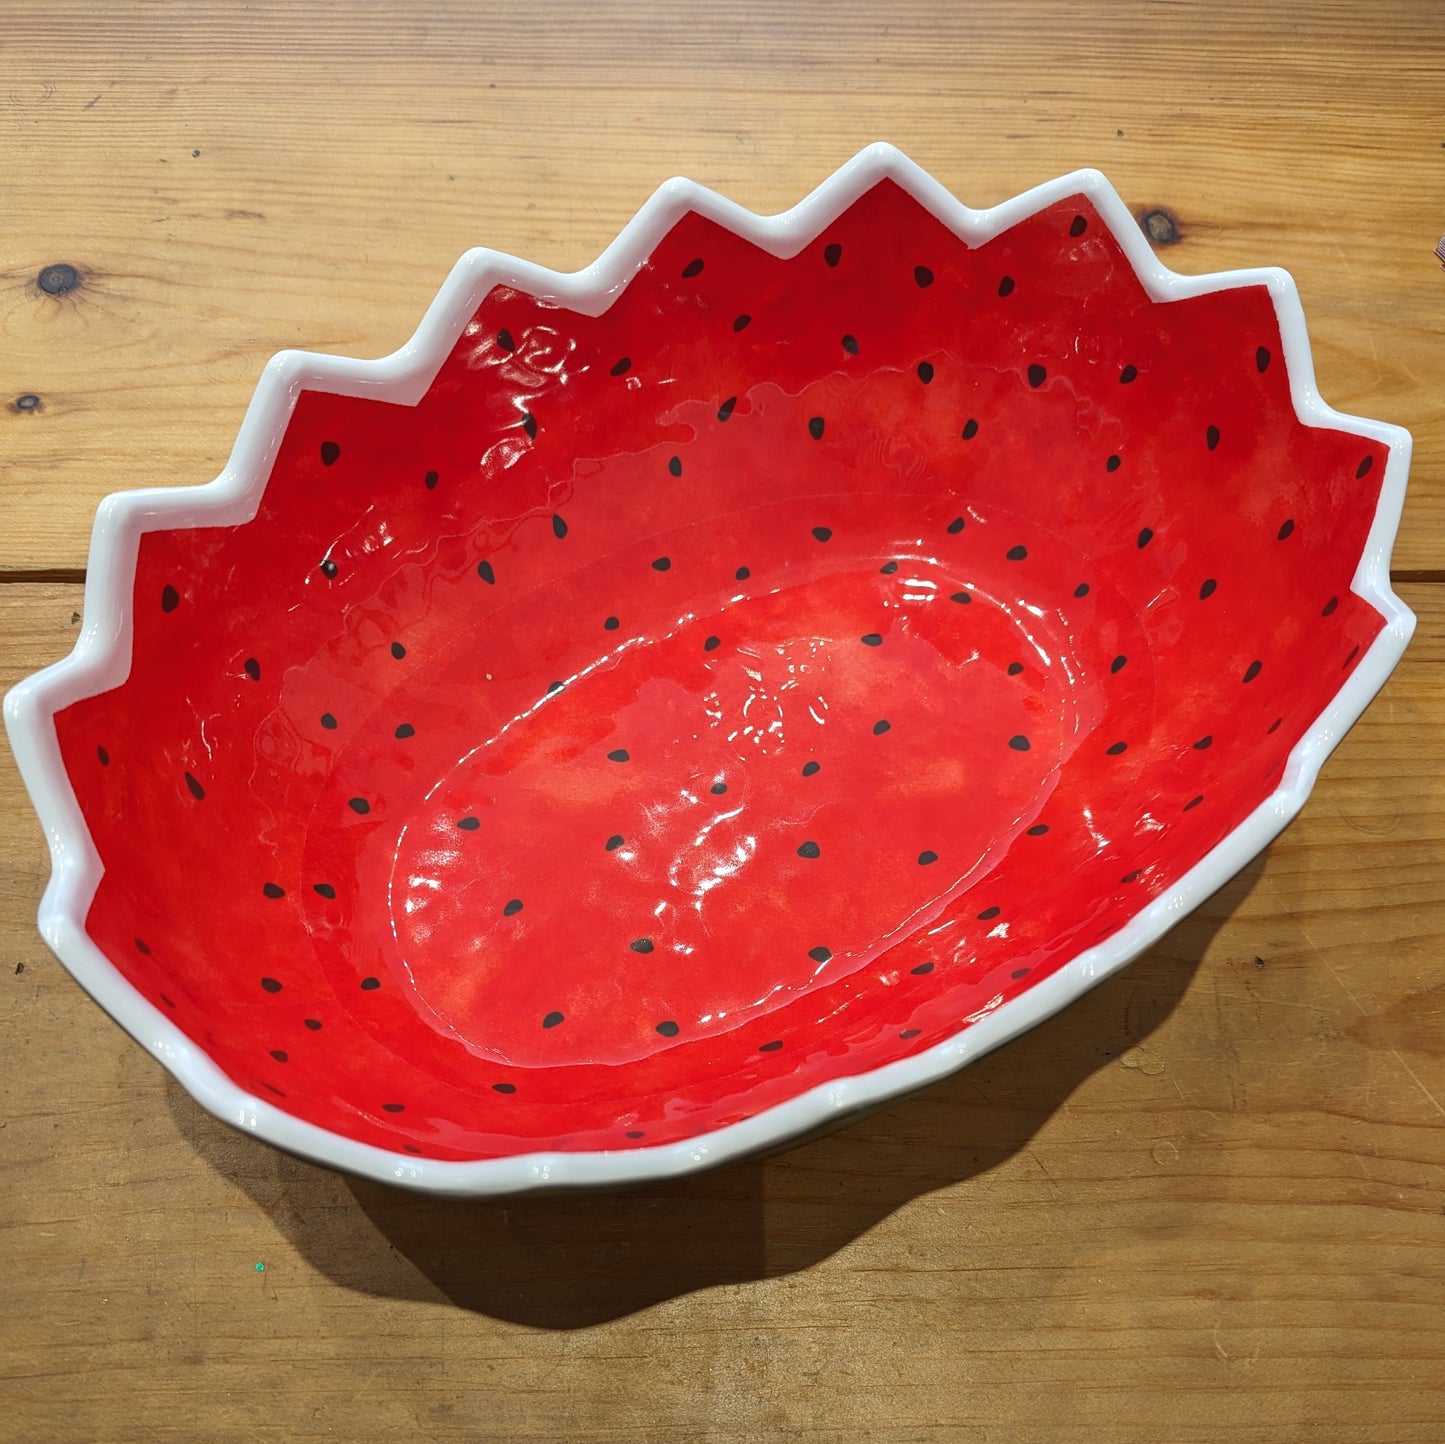 Watermelon Serving Bowl